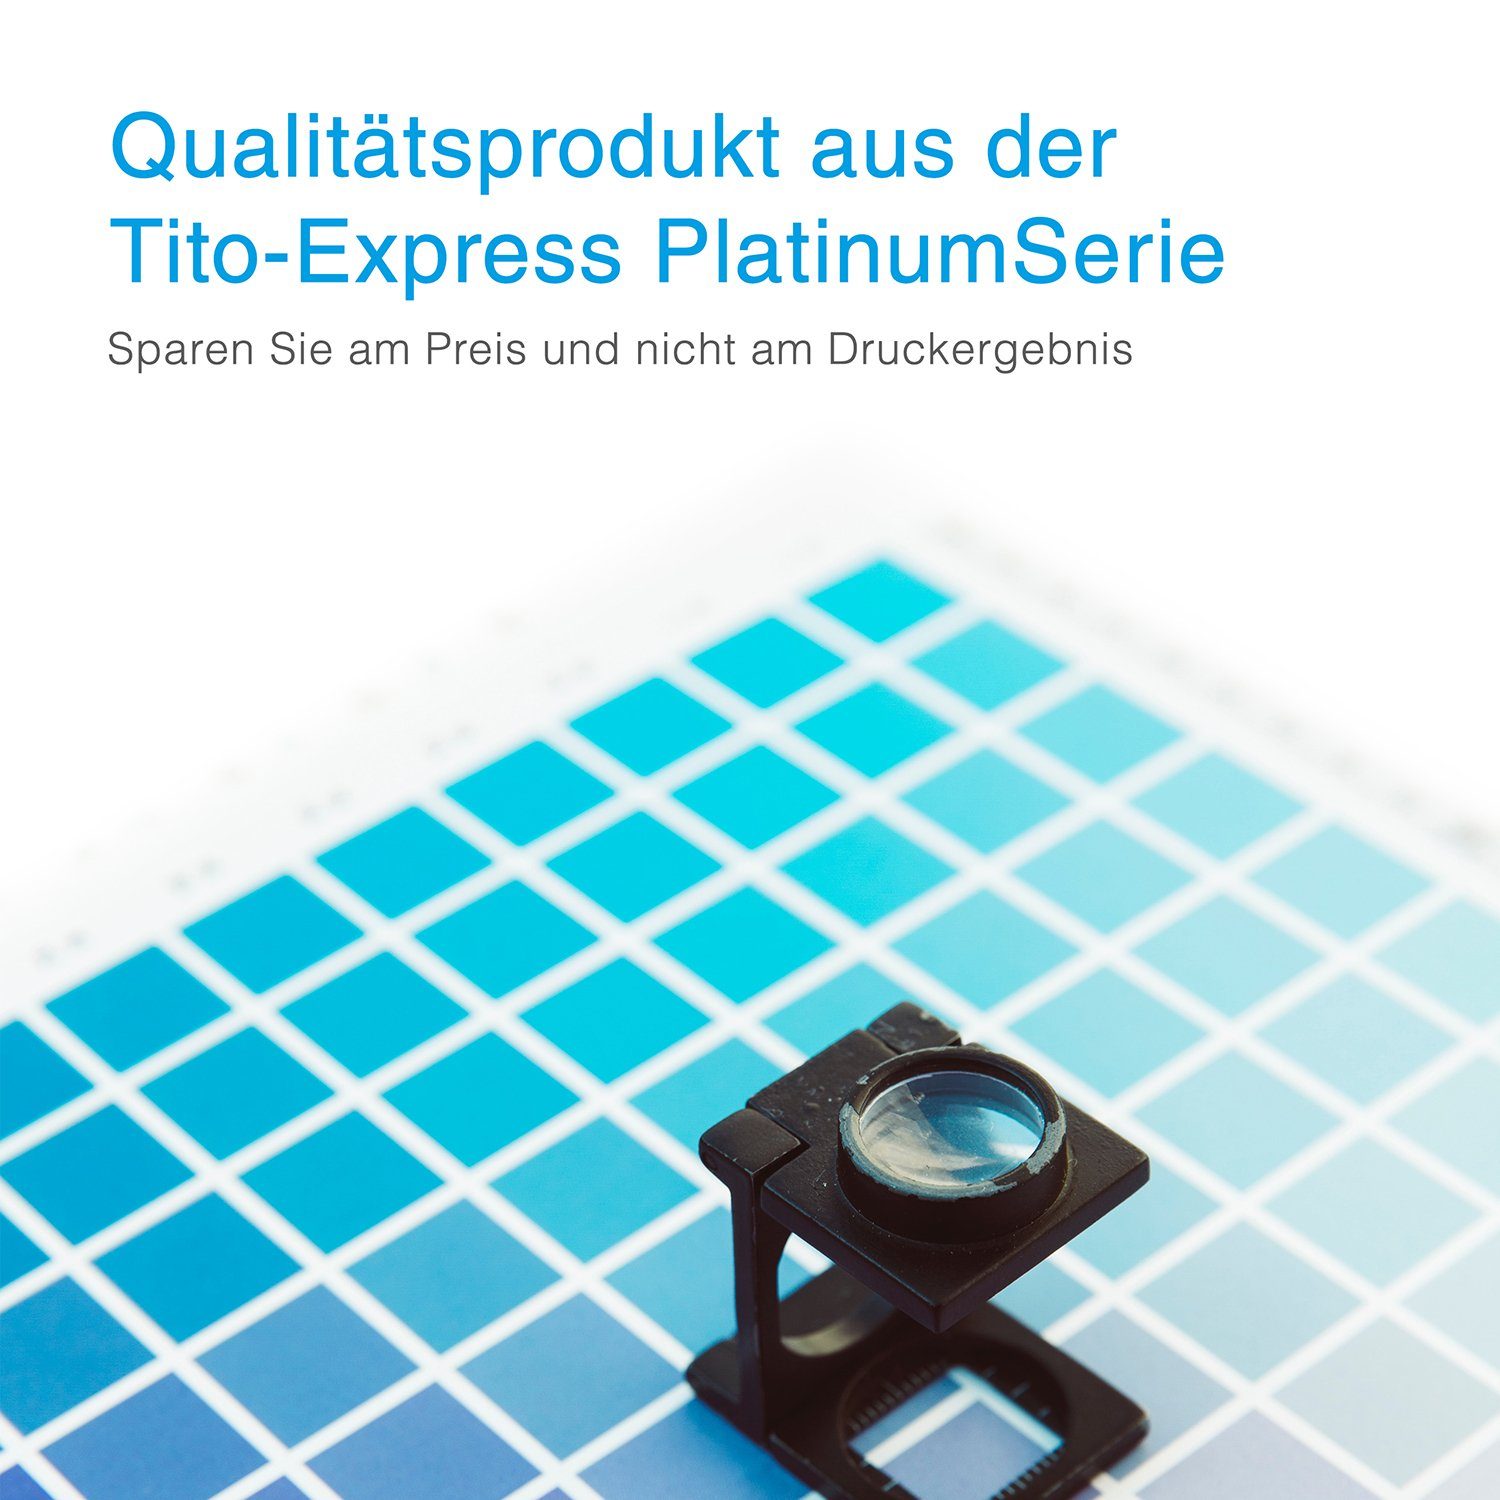 100 150 Tito-Express XL Color HP344XL HP Pro ersetzt 344XL Mobile 5900 Series HP Officejet 344 5940) H470 K7100 (für Tintenpatrone DeskJet